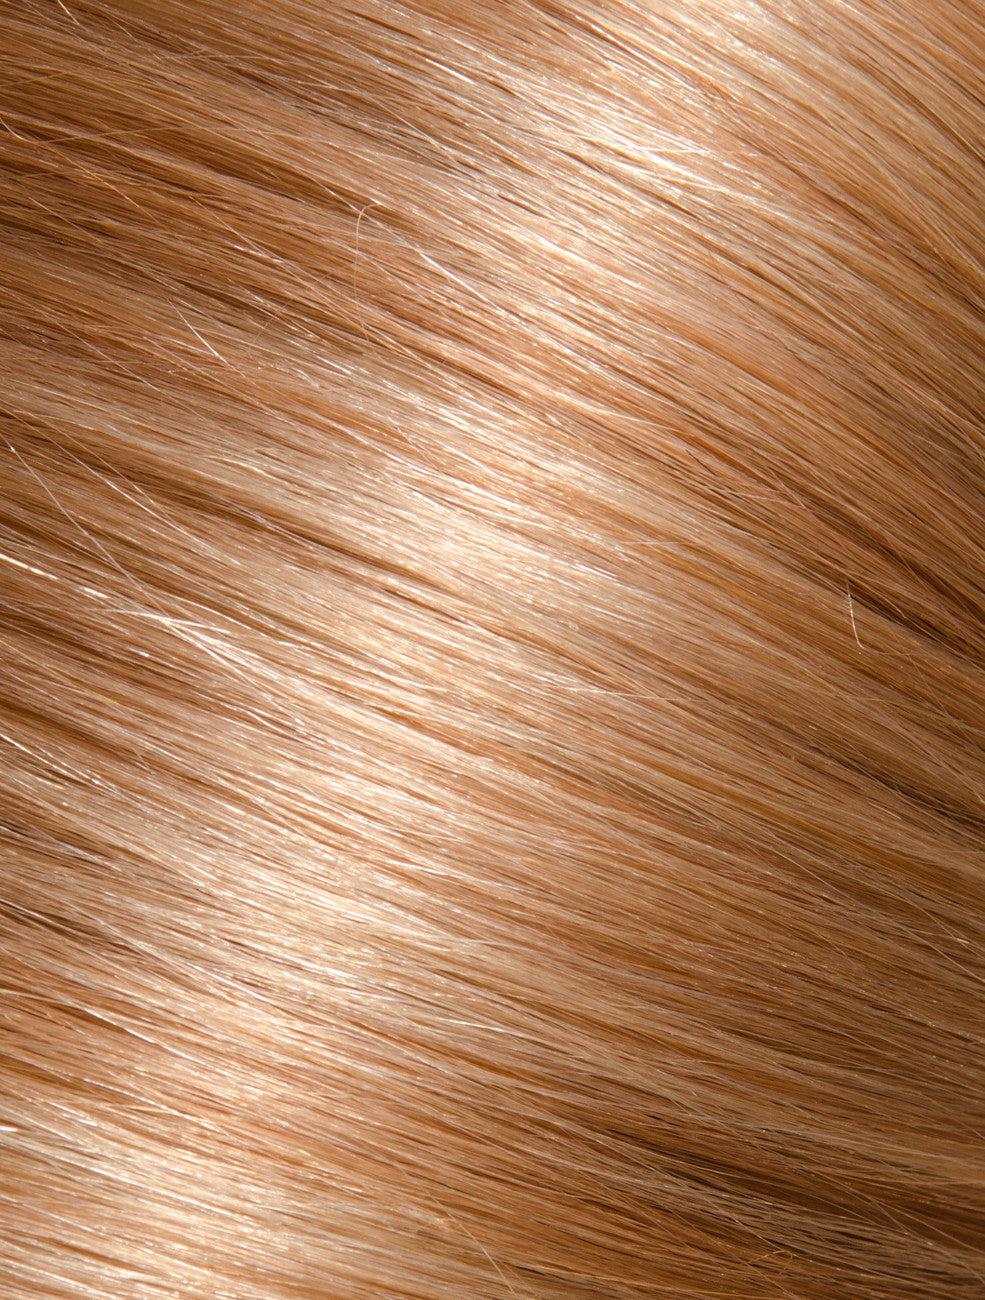 BROWN BLONDE KERATIN HAIR EXTENSIONS - 2